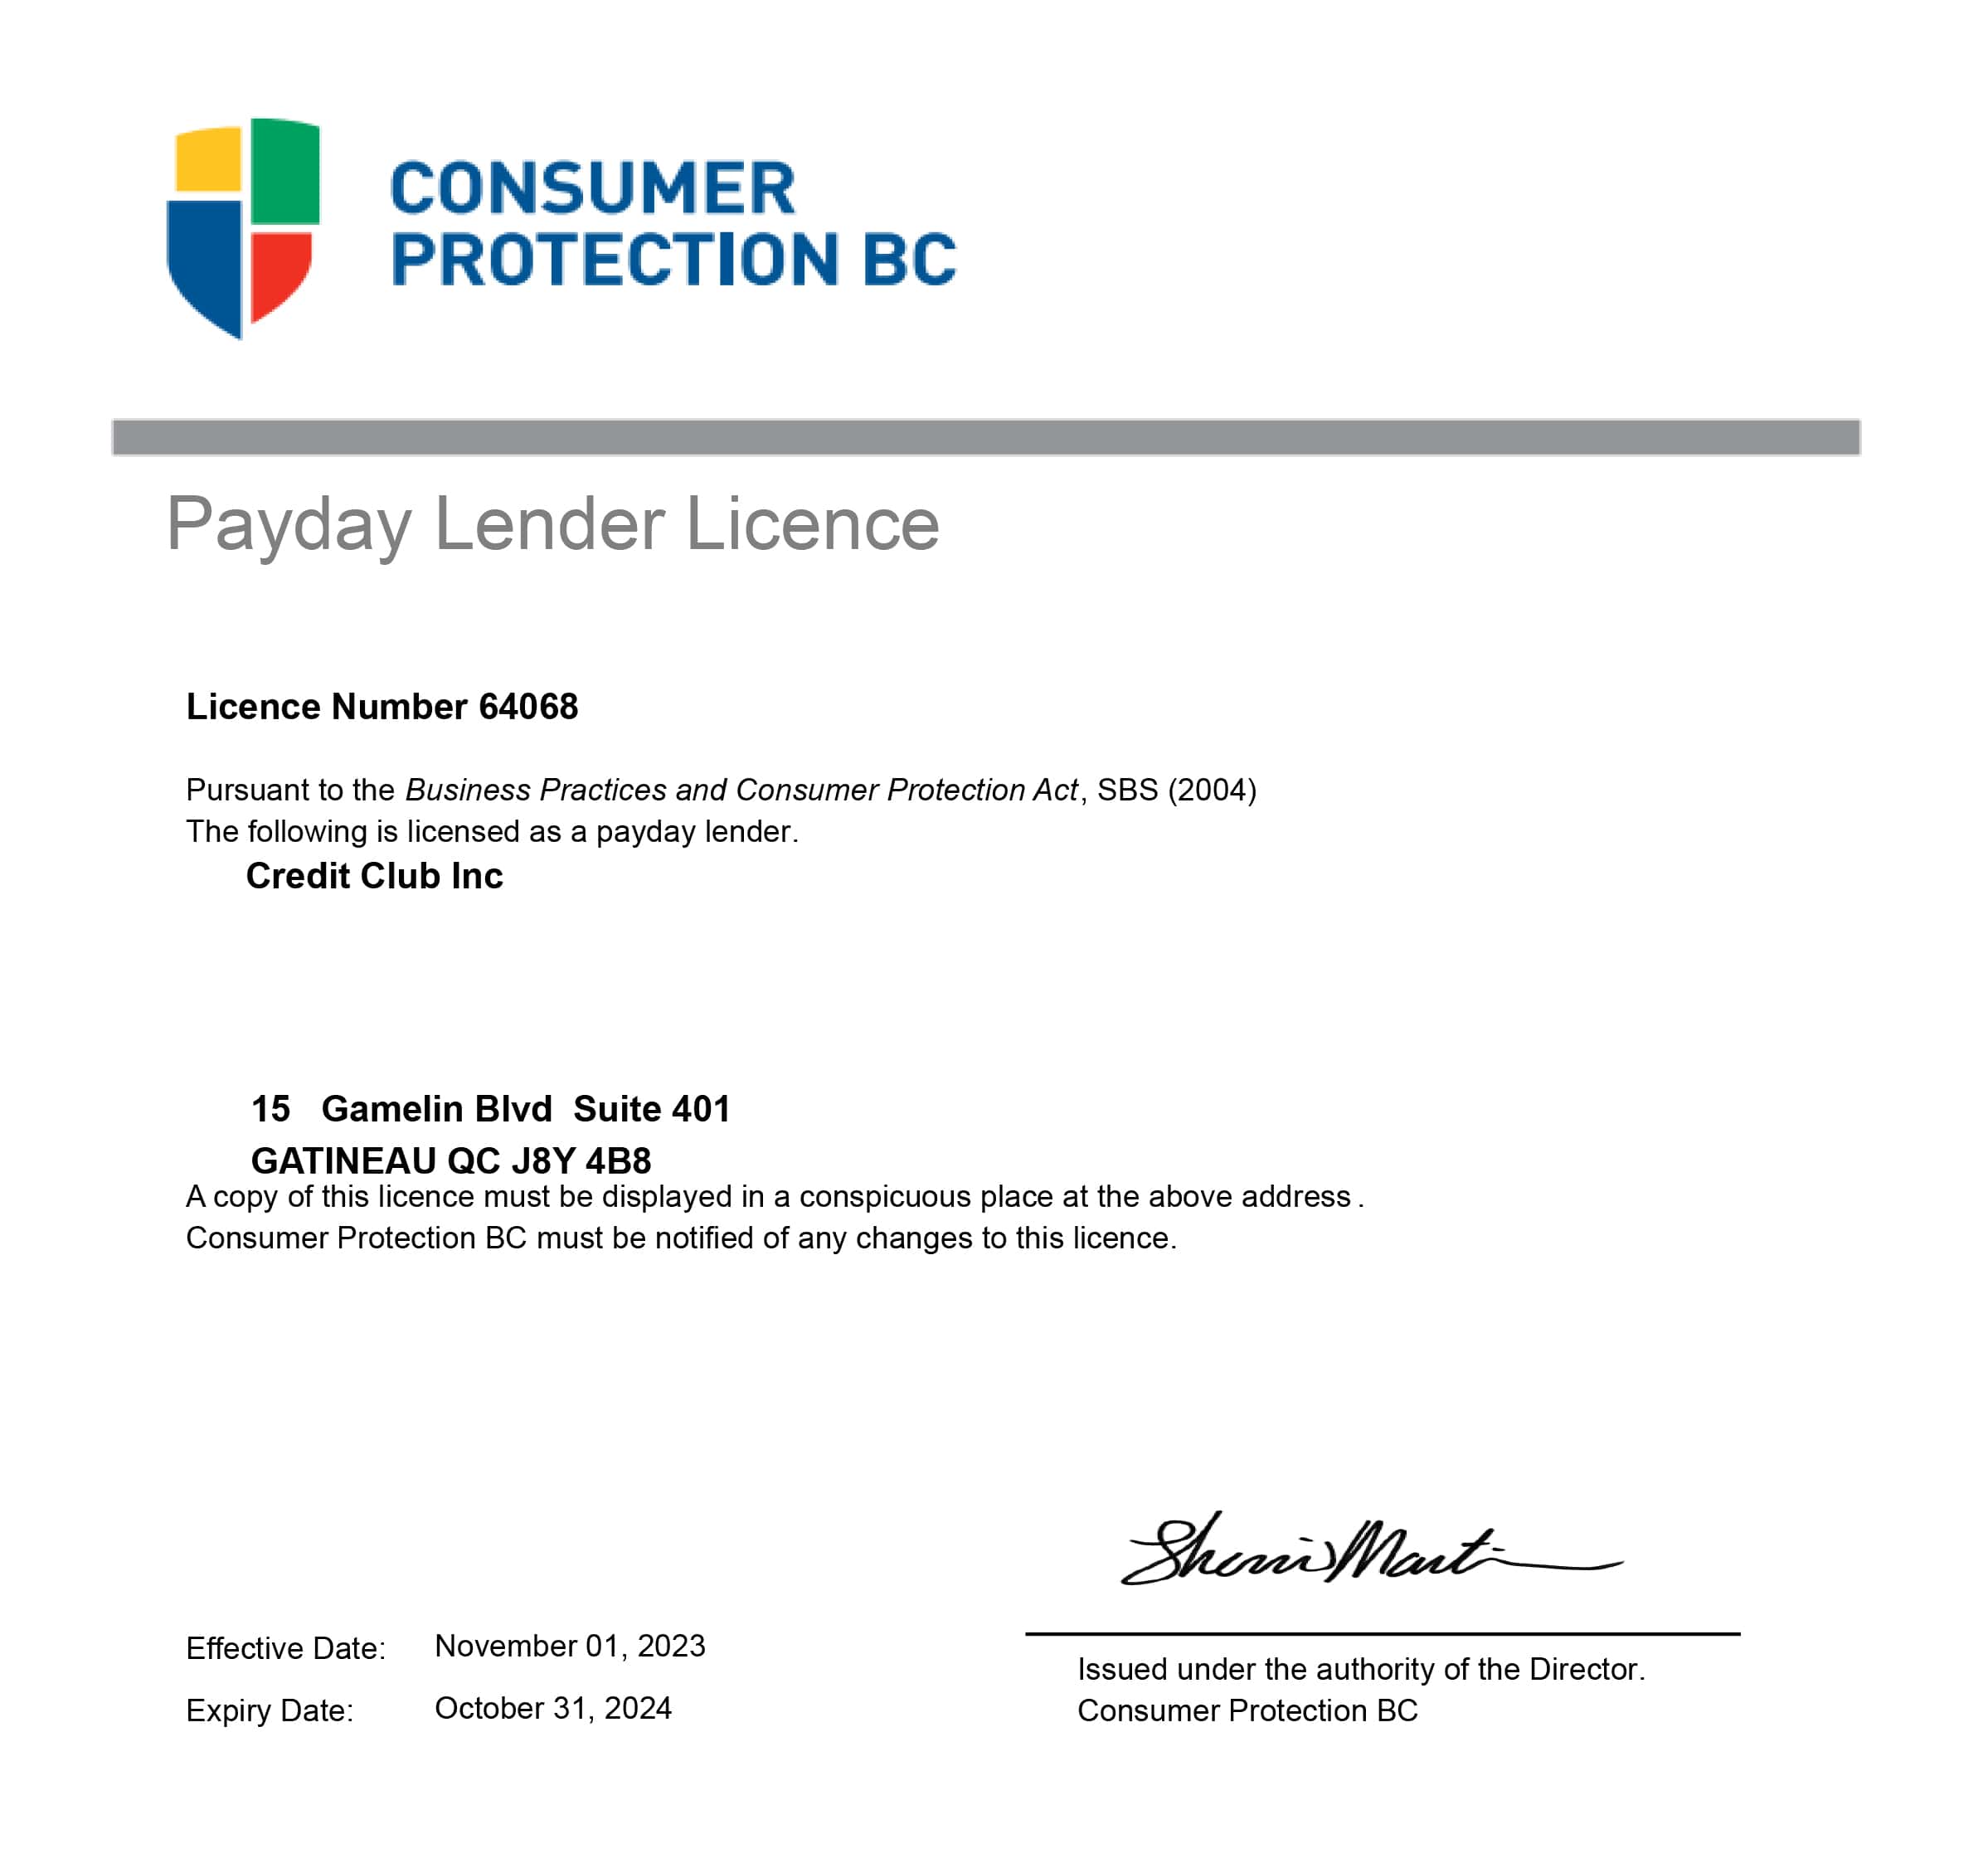 British Columbia Credit Club's consumer protection BC